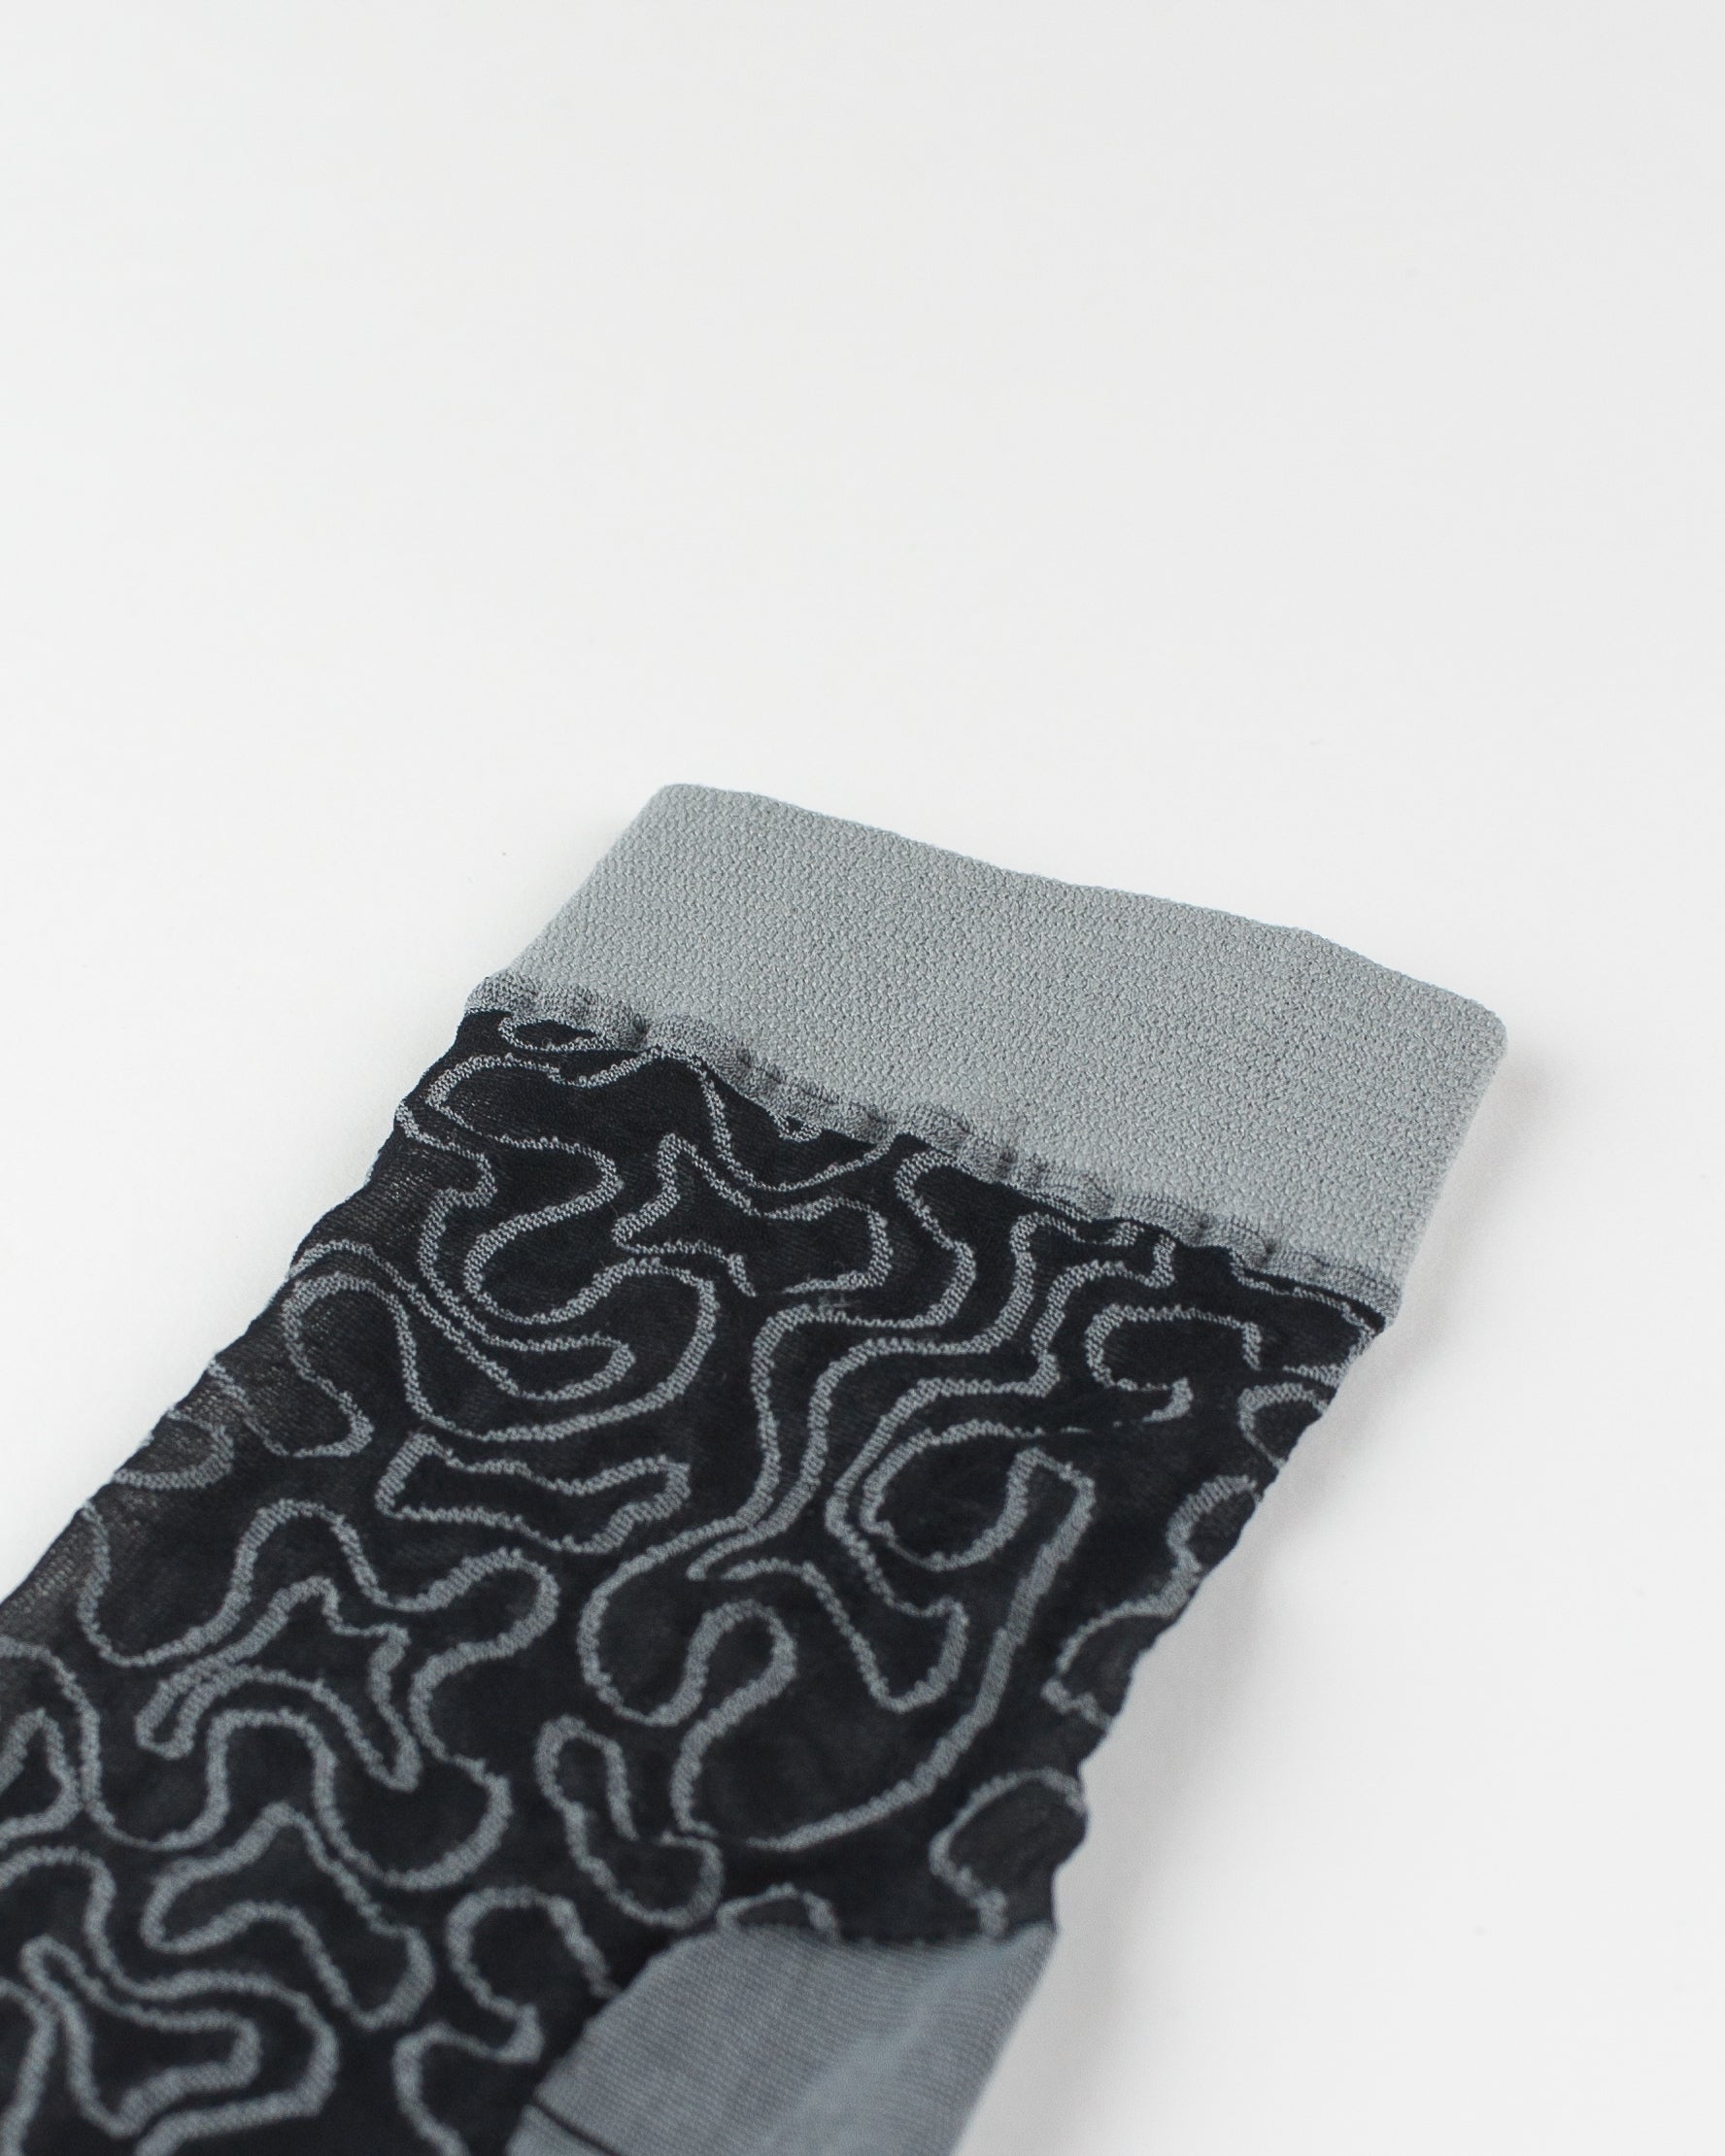 Fili Folli embroidered stretch tulle socks grey black